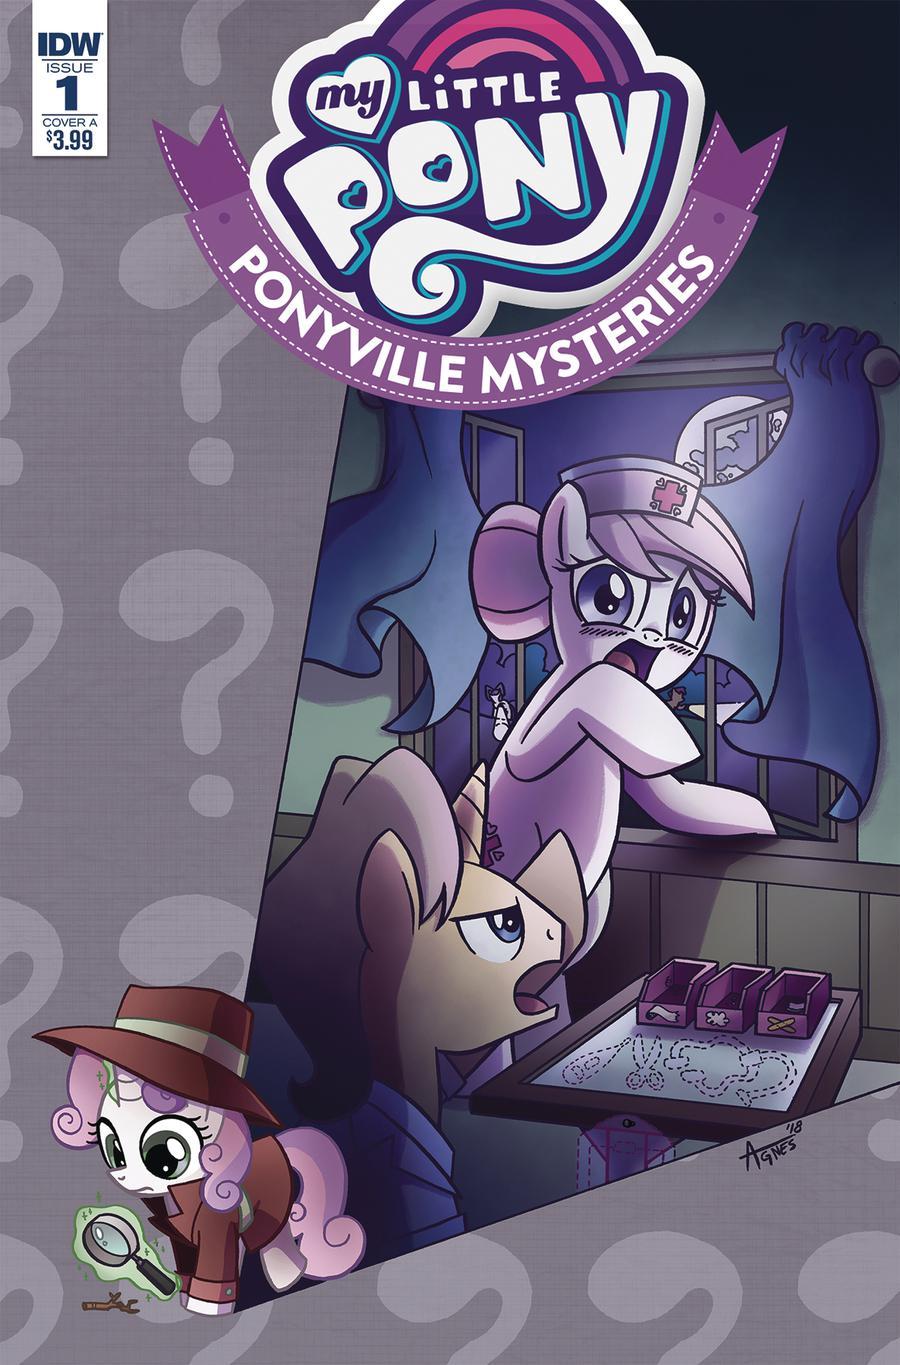 My Little Pony Ponyville Mysteries Vol. 1 #1